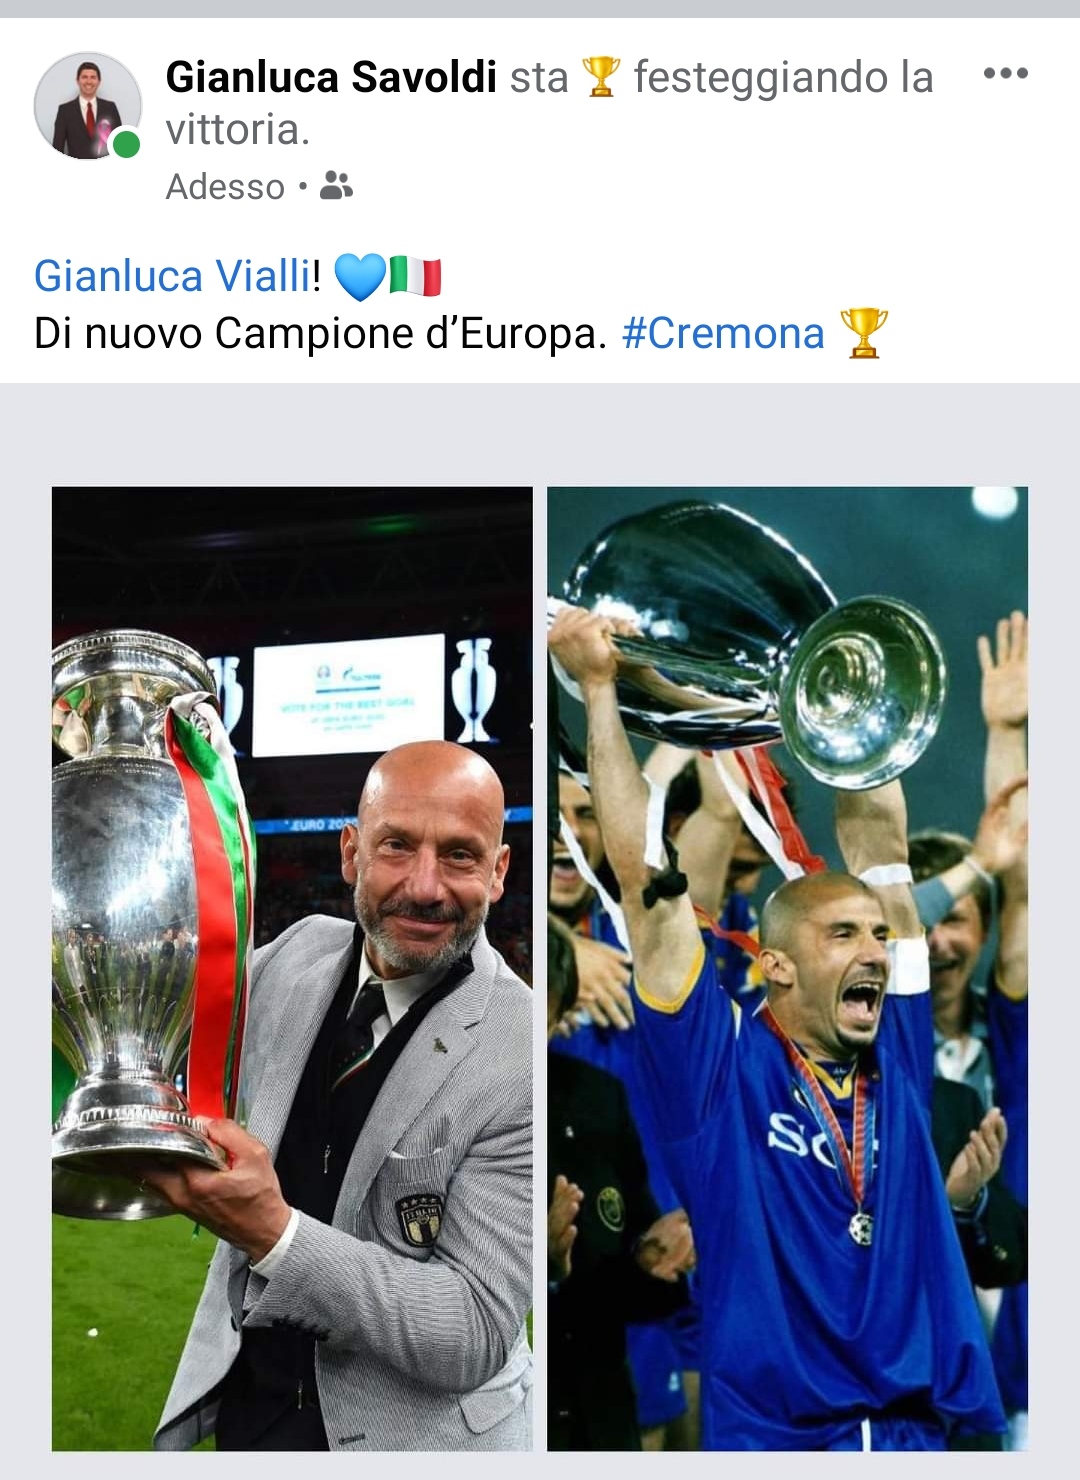 Chapeau al PopSindaco d’Italia Gianluca Savoldi, tra i primi a complimentarsi col campione d’Europa, cremonese Rock, Gianluca Vialli